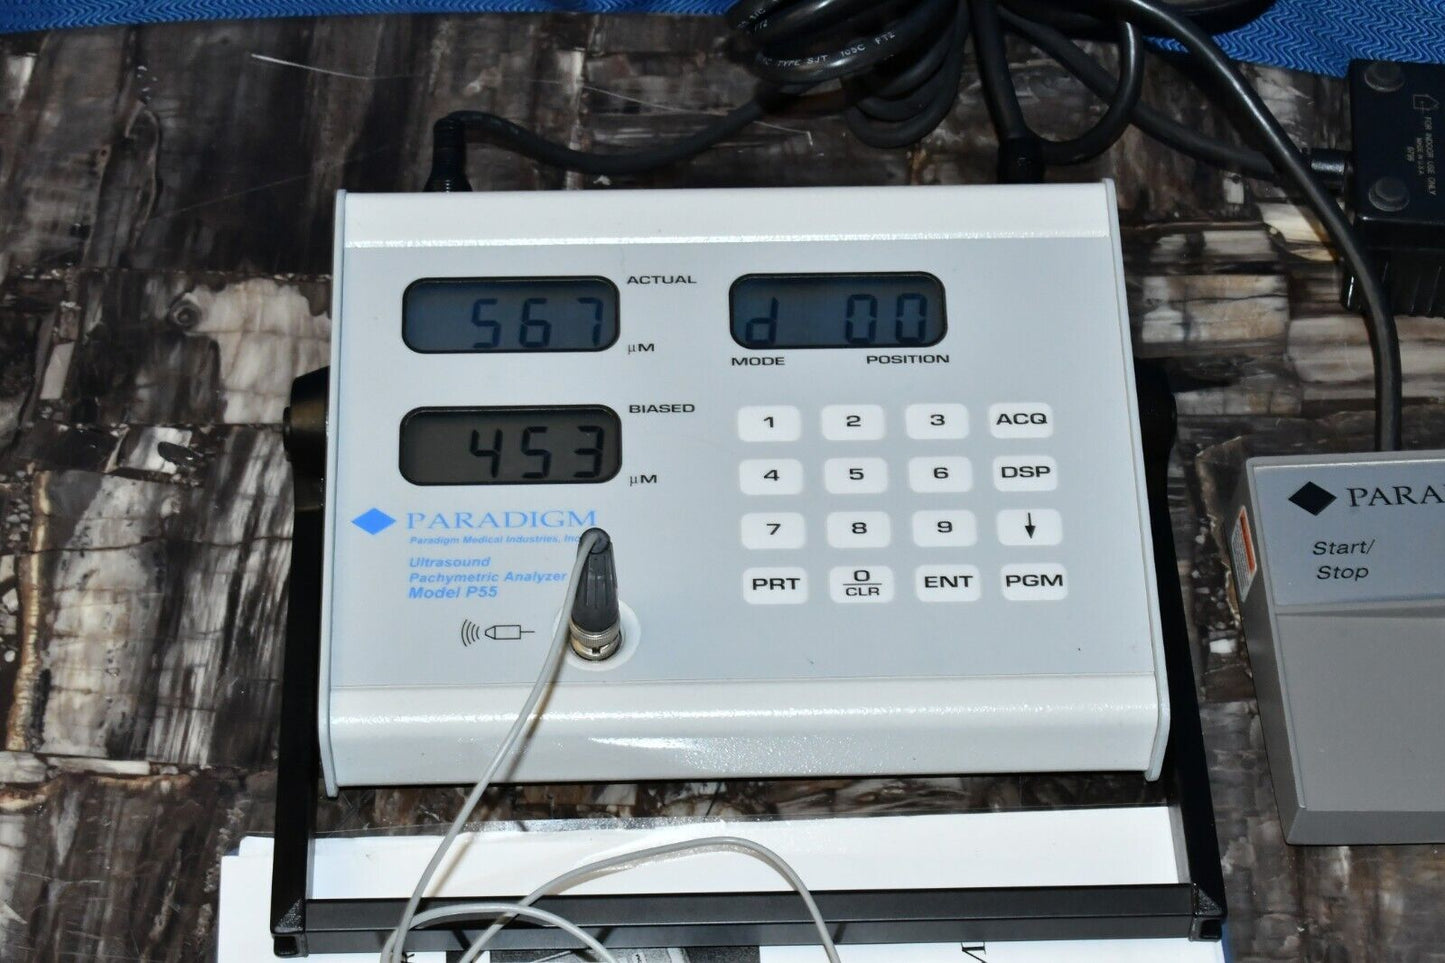 Paradigm Ultrasonic pachymeter